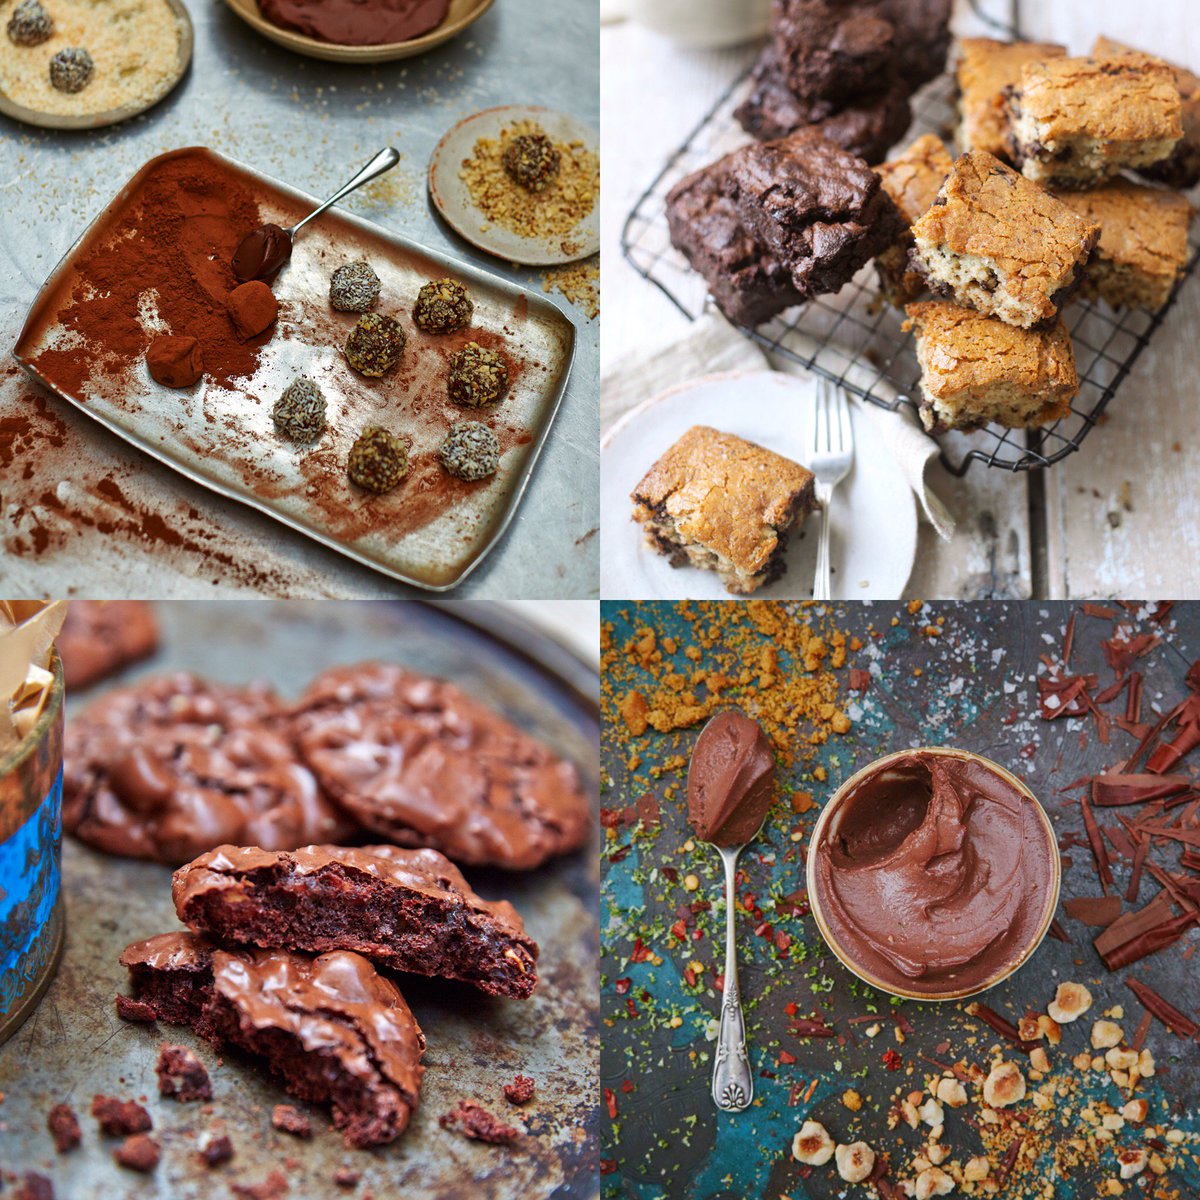 These tasty recipes for chocolate treats are sweet, indulgent & completely #vegan. YUM! https://t.co/UNL3raVYRj https://t.co/wpynVTxtbF